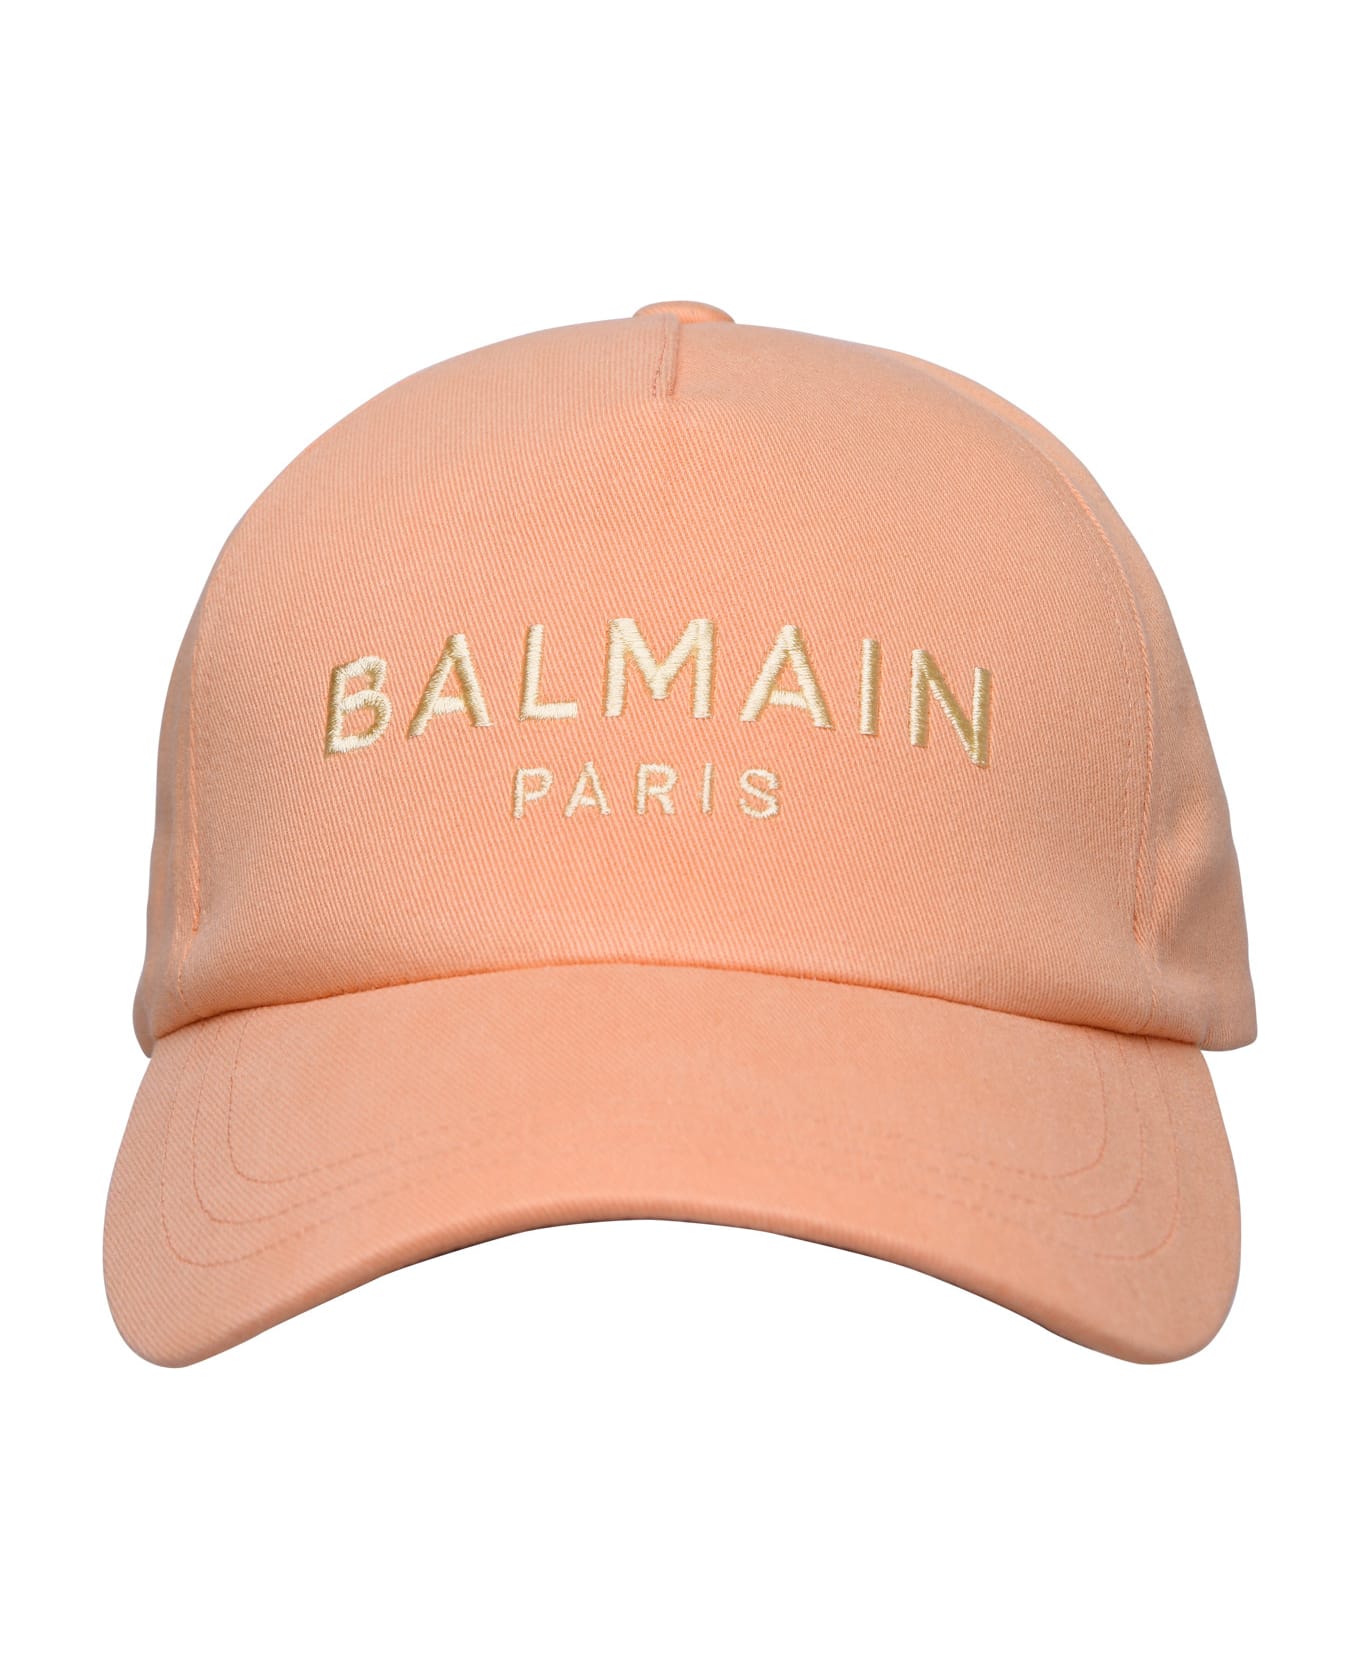 Balmain Logo Embroidered Baseball Cap - Orange